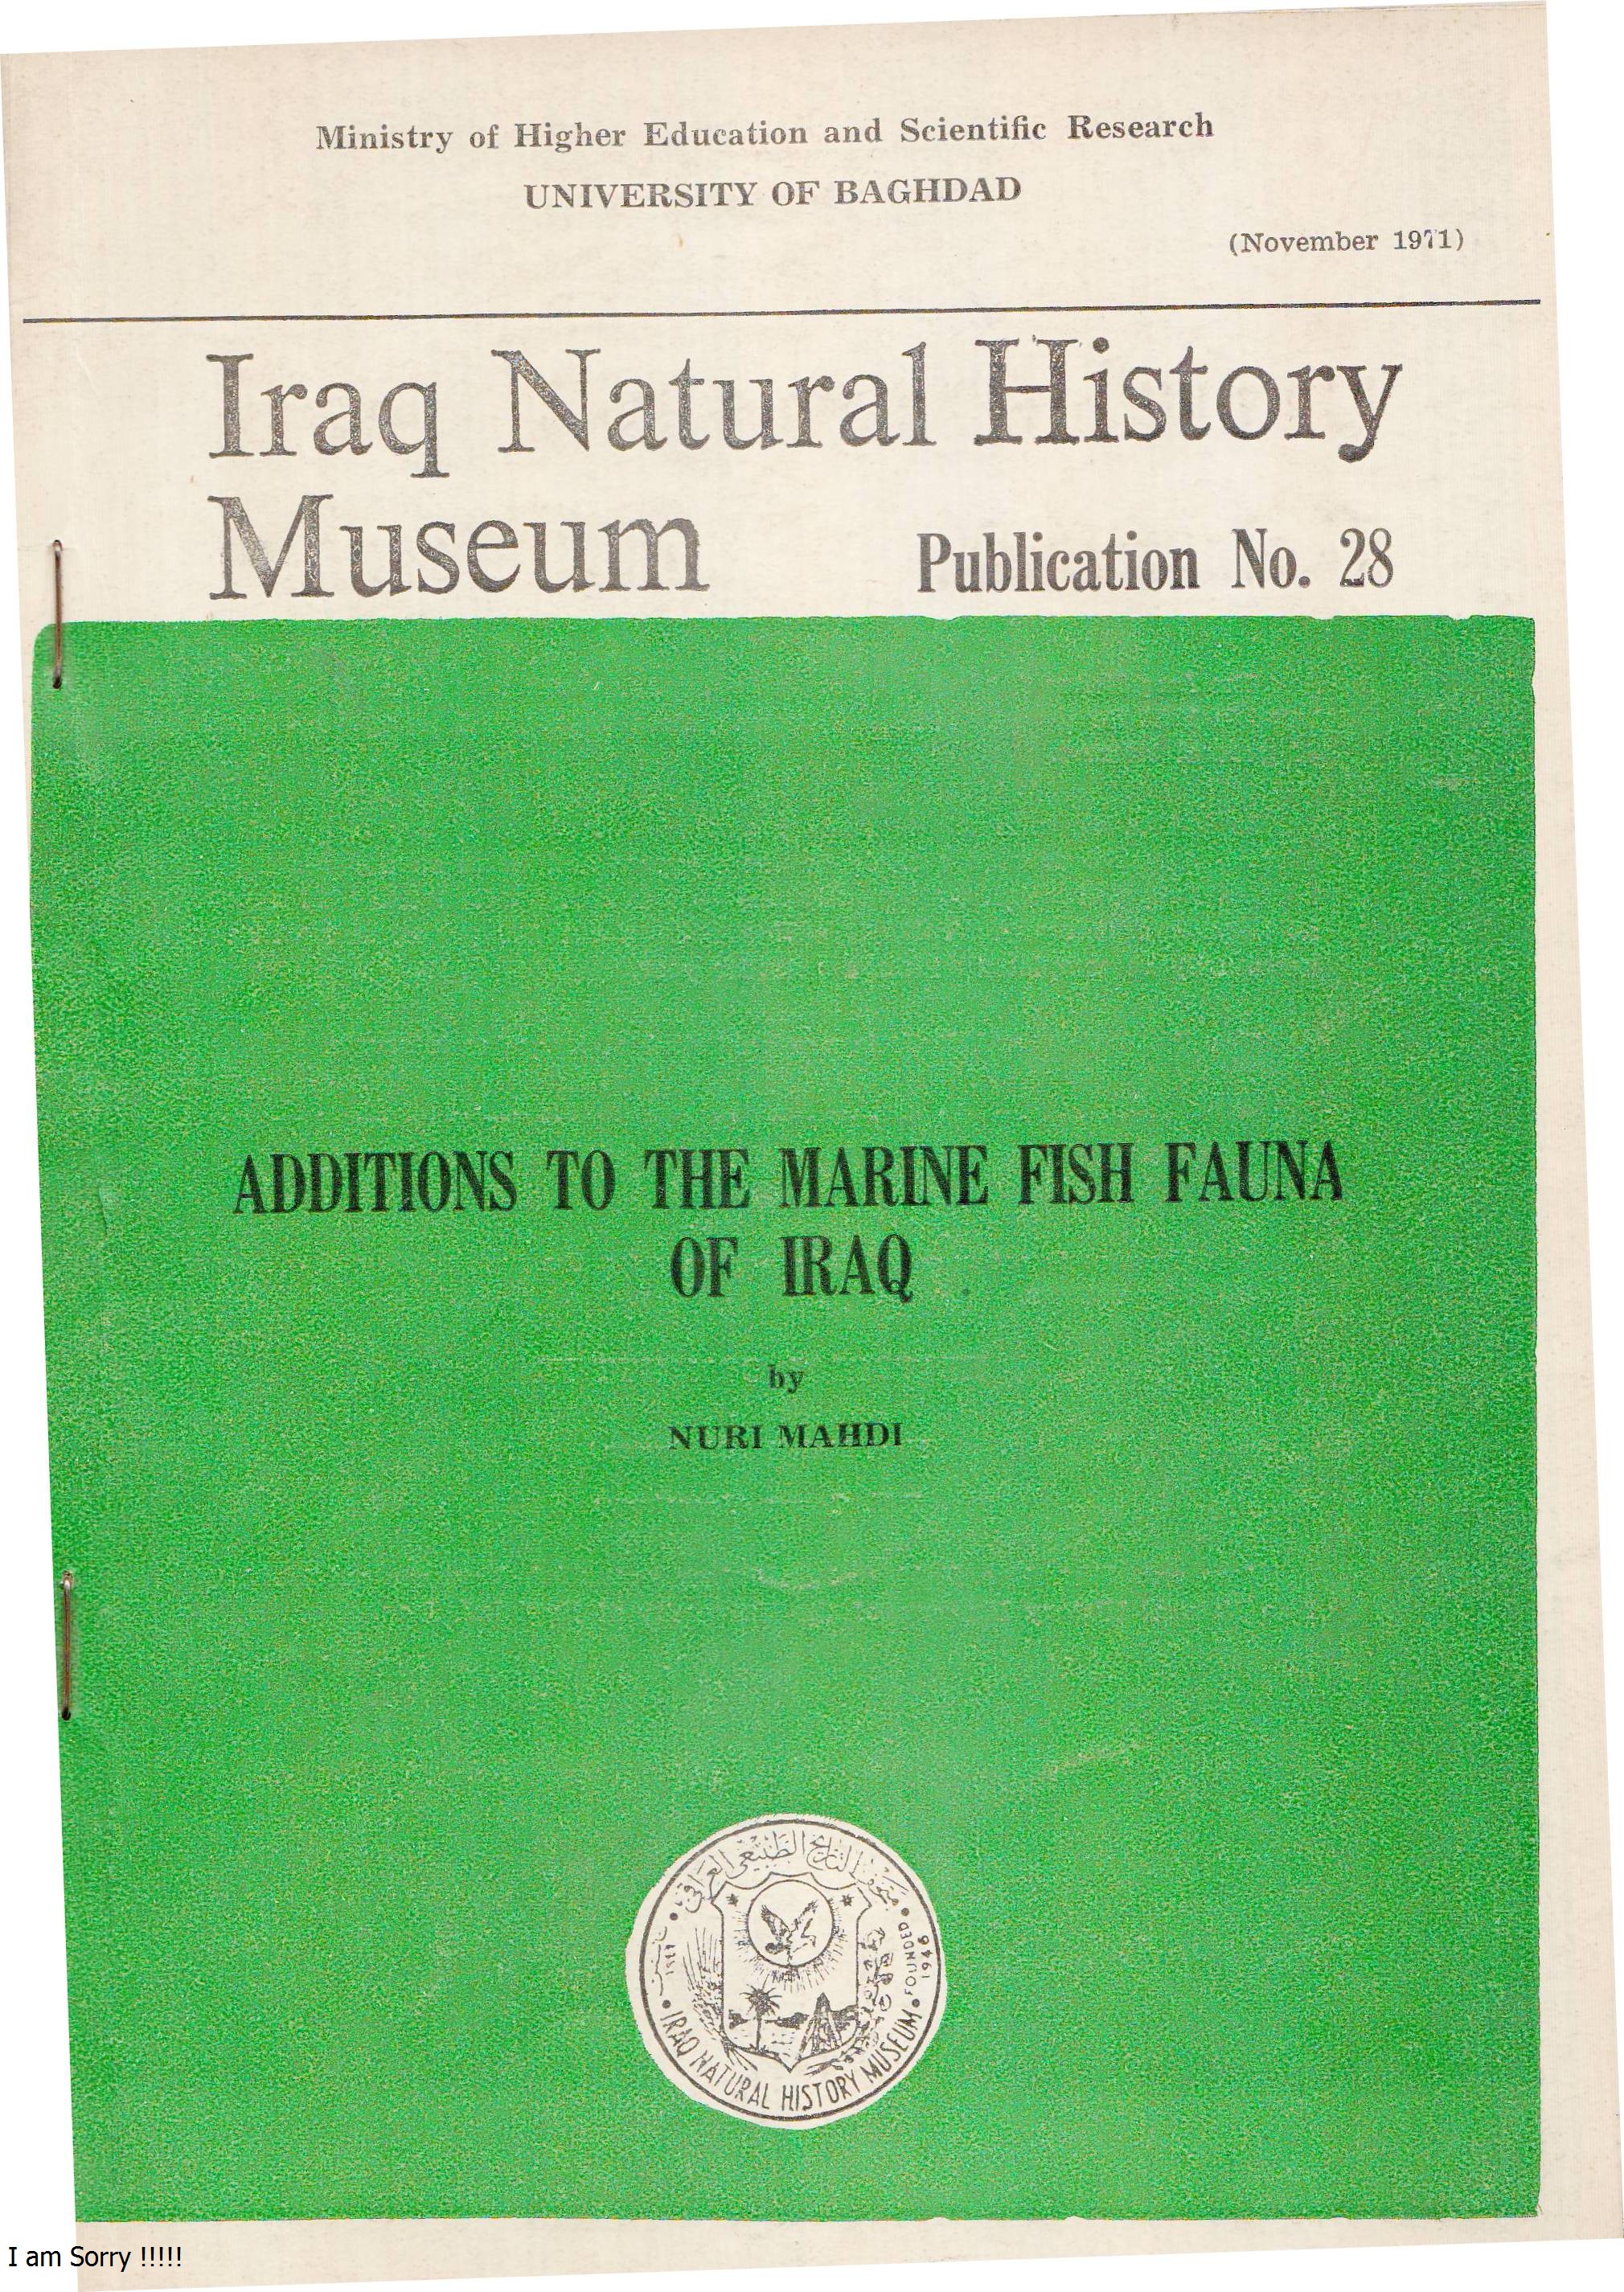 					معاينة عدد 28 (1971): Addition of Marine Fish Fauna of Iraq by NURI MAHDI, Iraq Nat.Hist. Mus, Baghdad, Iraq 
				